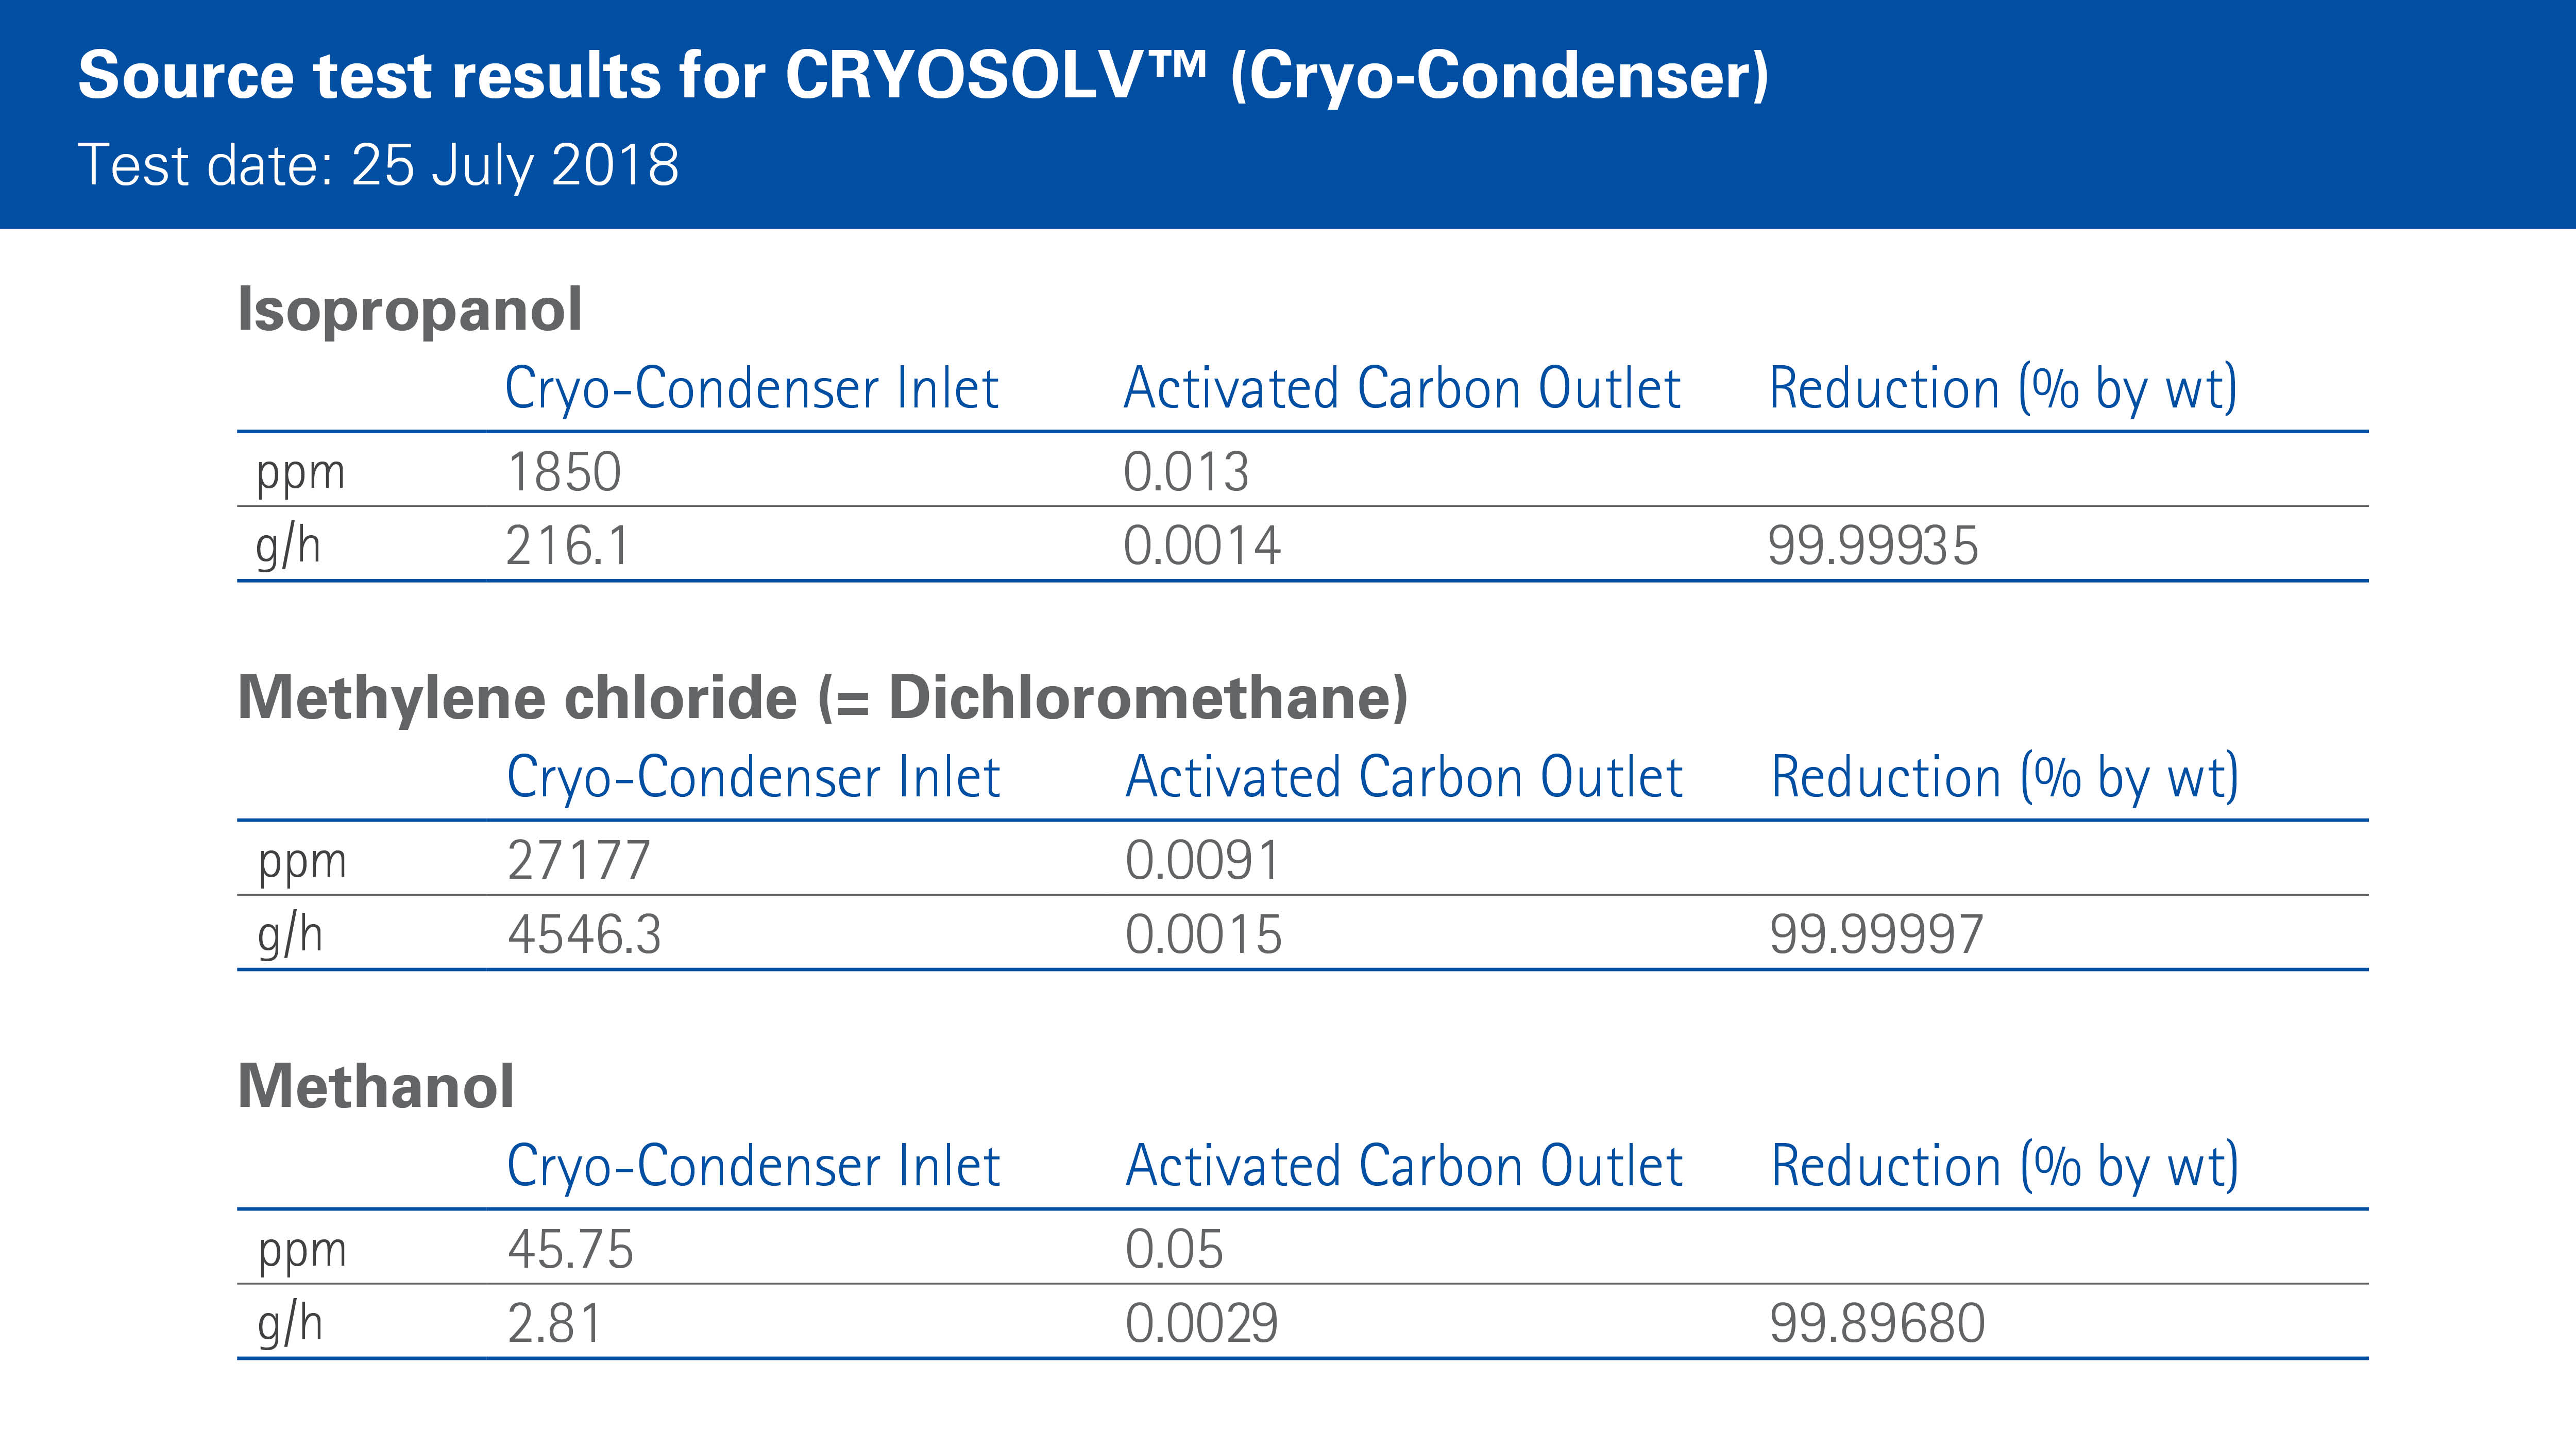 source test results for isopropanol, methylene chloride, methanol